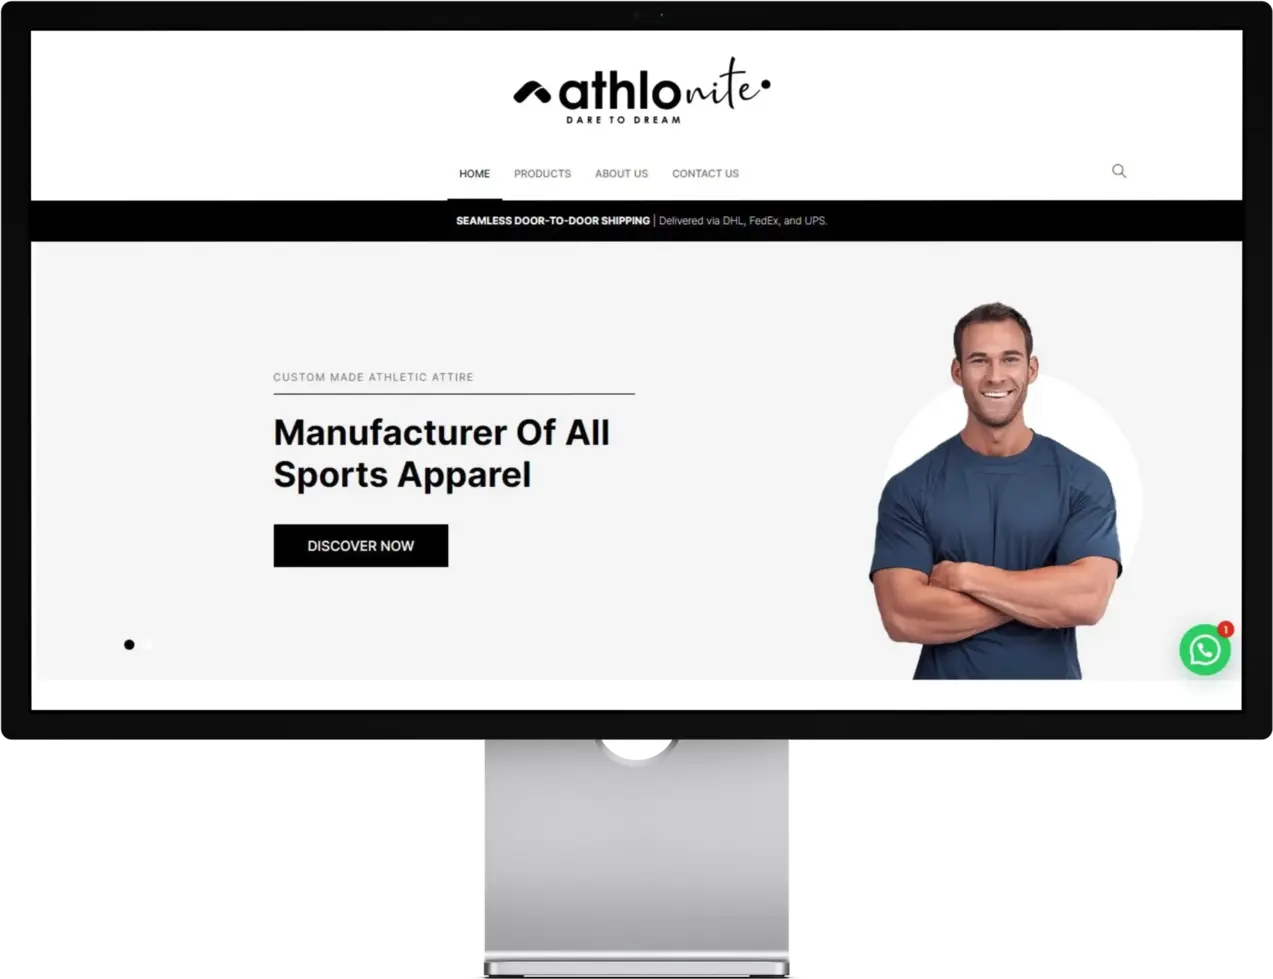 AthloNite website screenshot